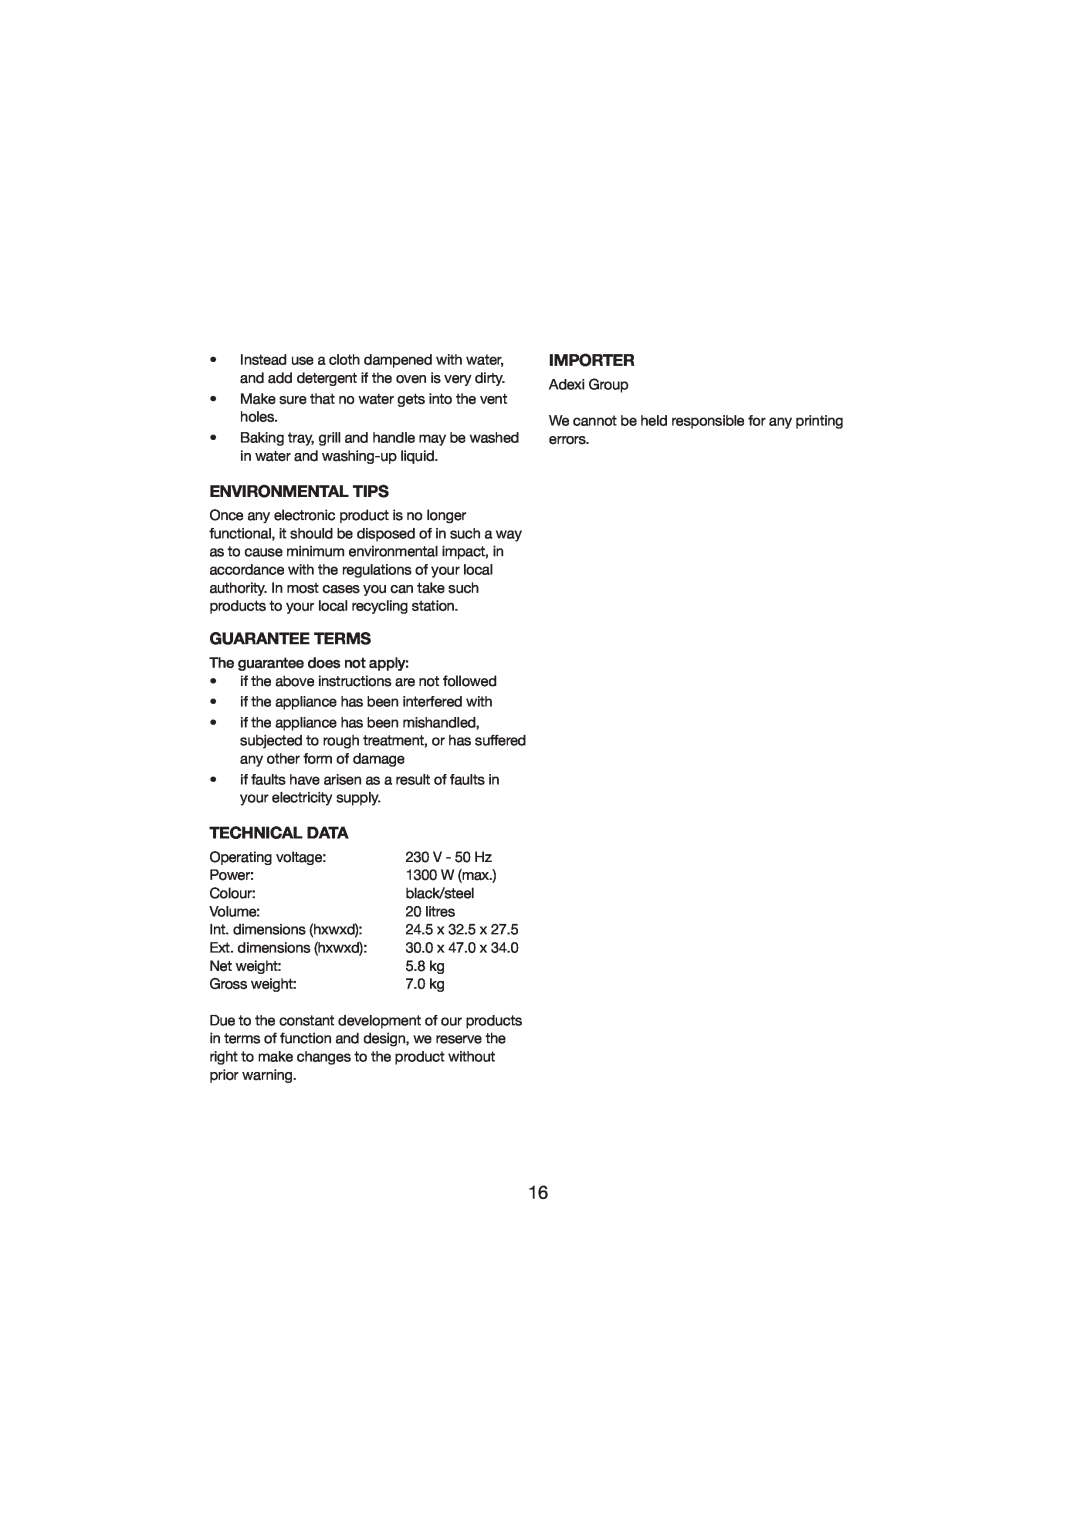 Melissa 251-003/004 manual Environmental Tips, Guarantee Terms, Technical Data, Importer 